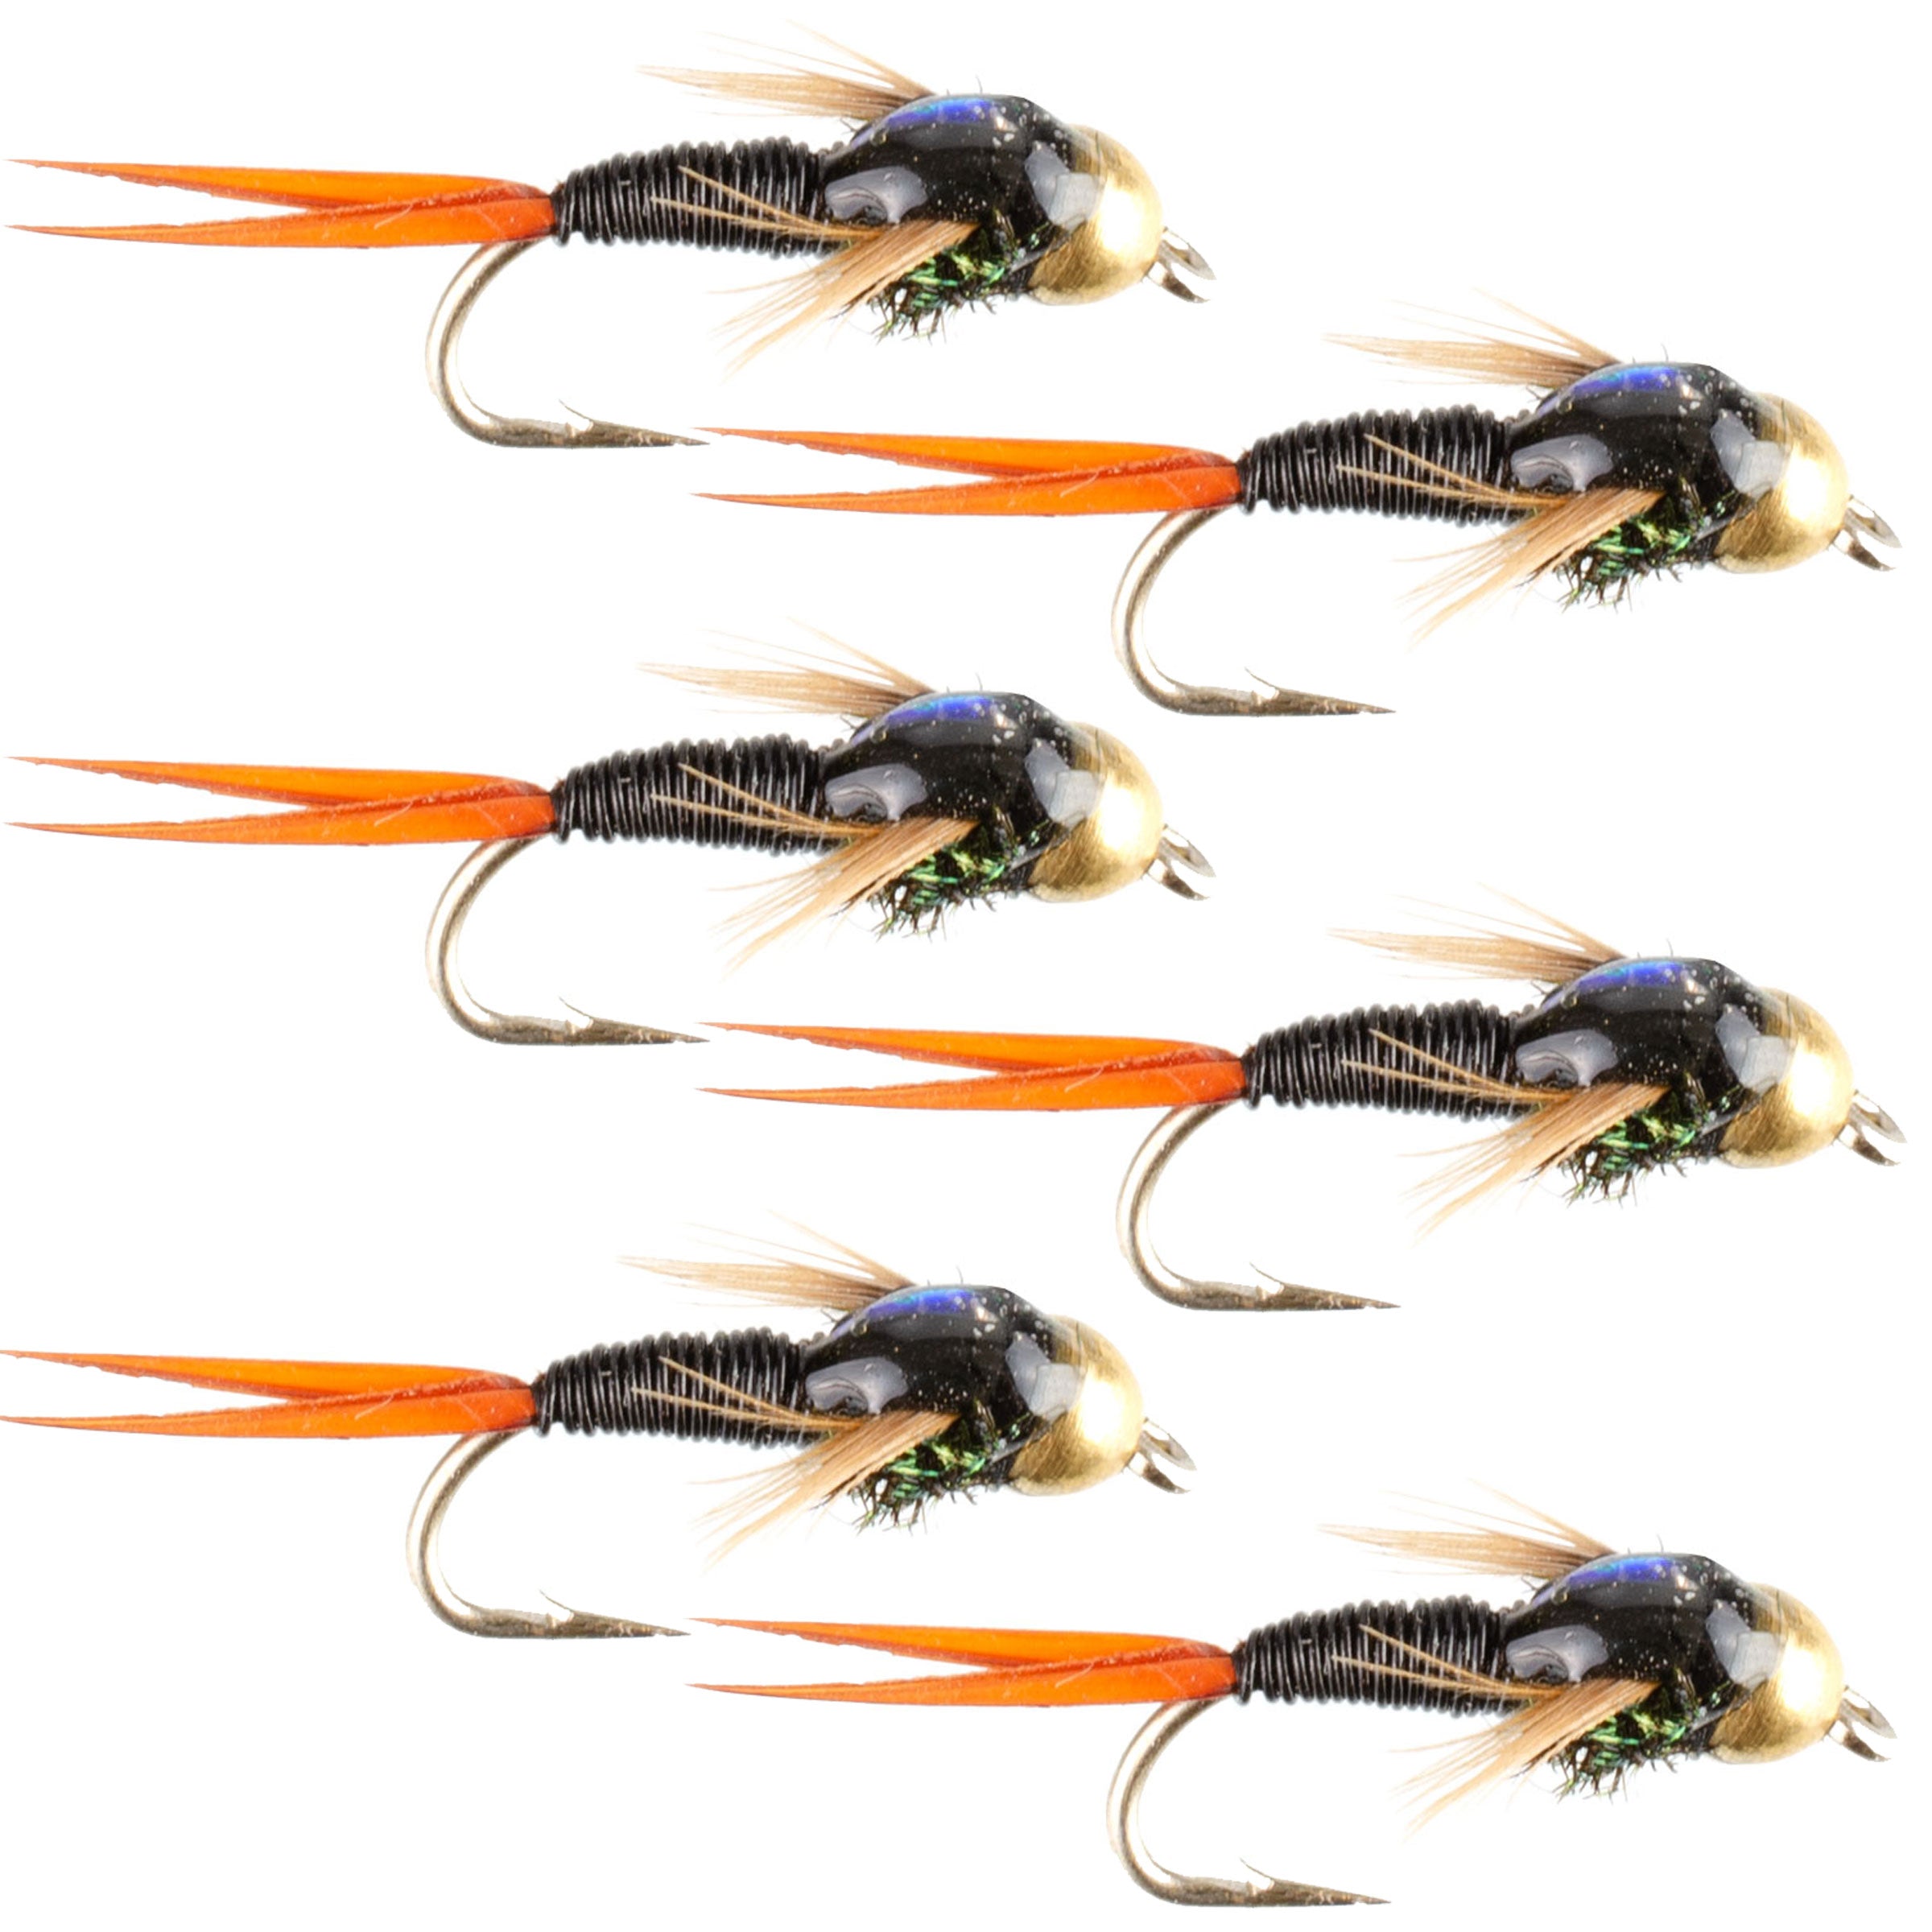 Bead Head Black Copper John Nymph Fly Fishing Flies - Set of 6 Flies H